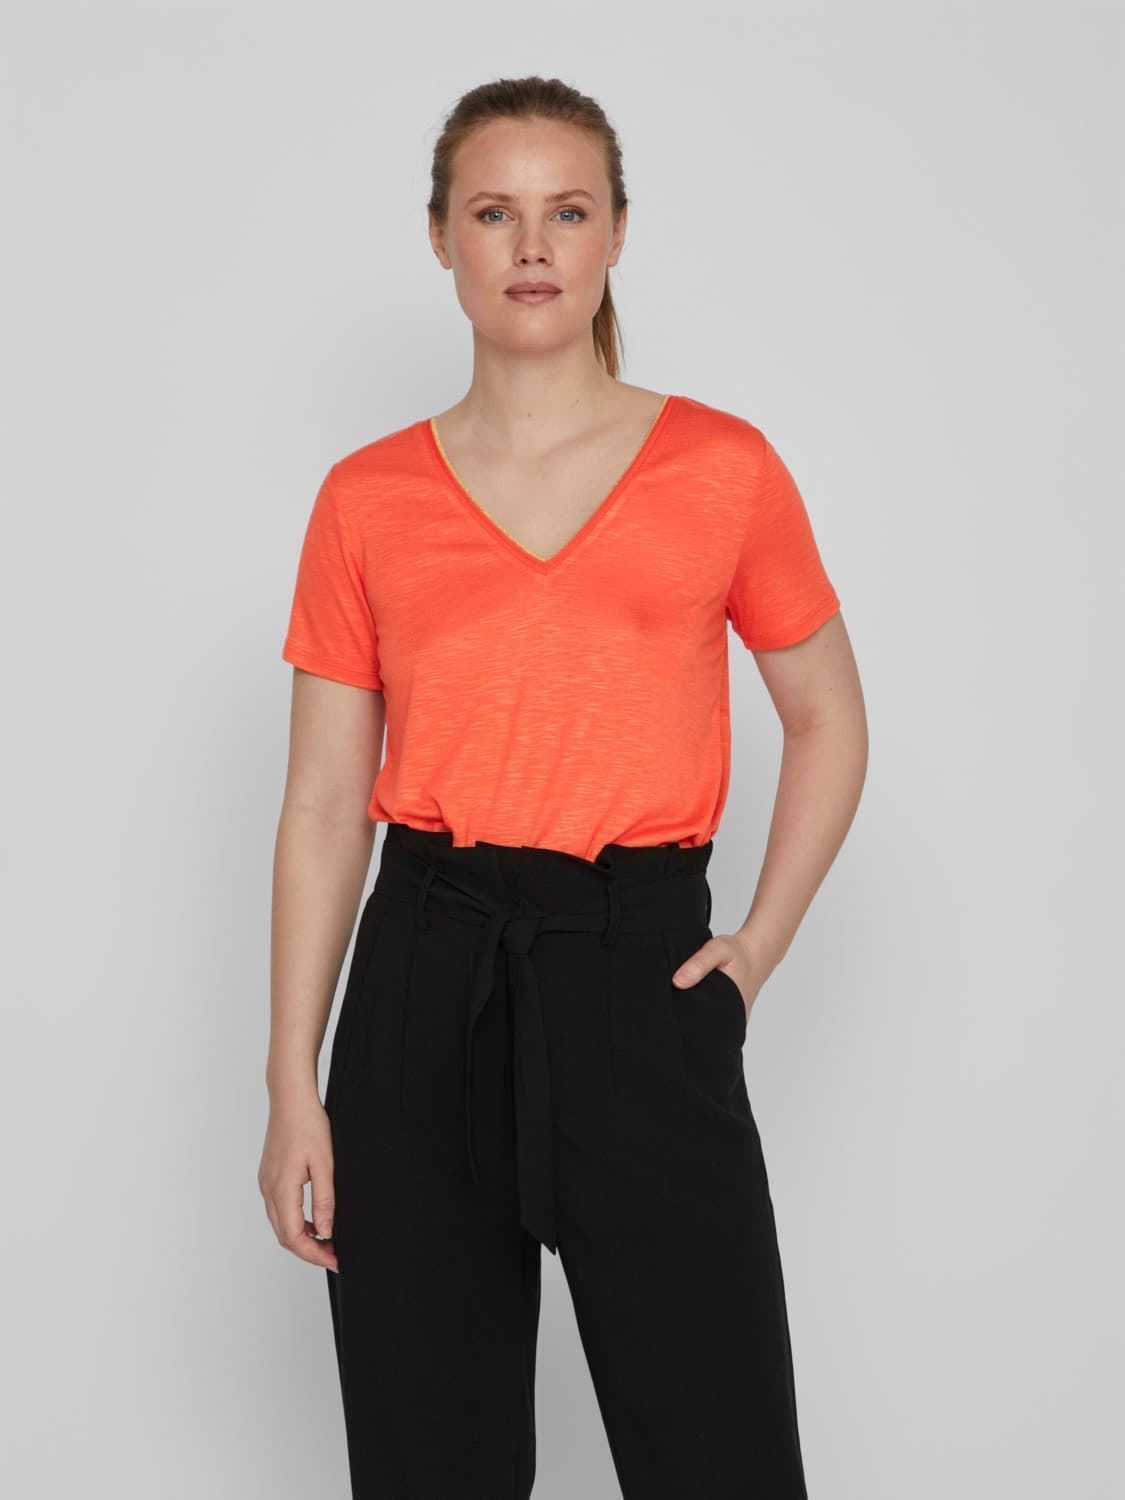 Camiseta naranja vinoel - Imagen 1